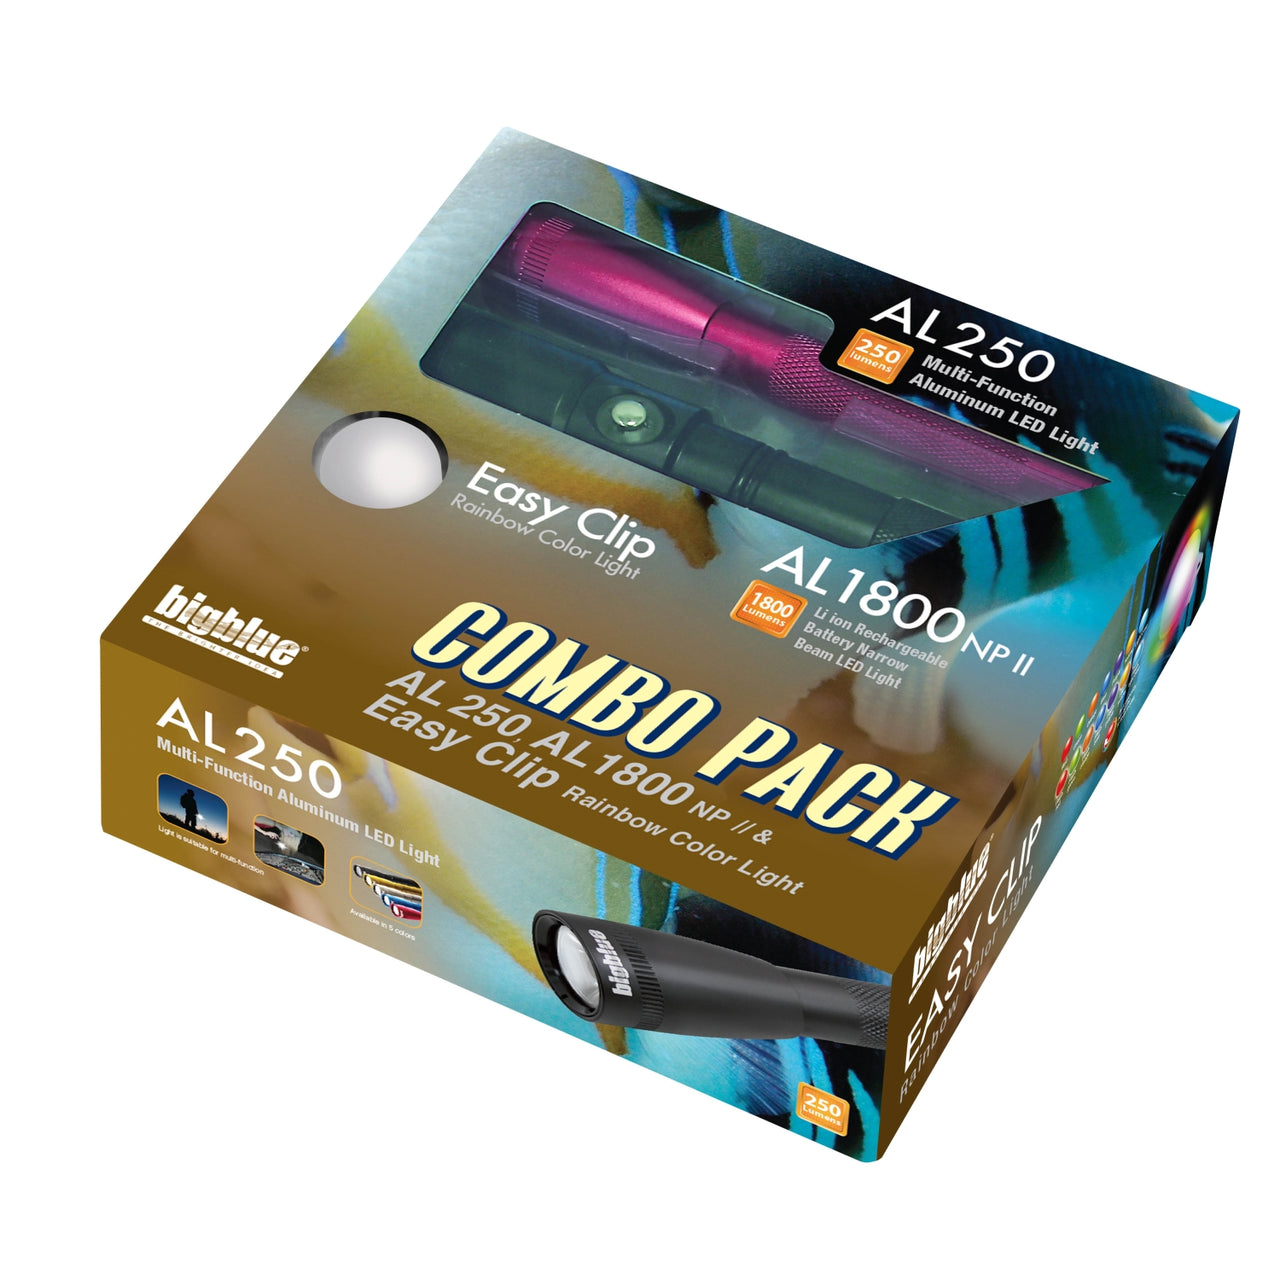 Dive Light Combo Pack: AL250 Black & AL1800NP Black & Easy Clip Rainbow